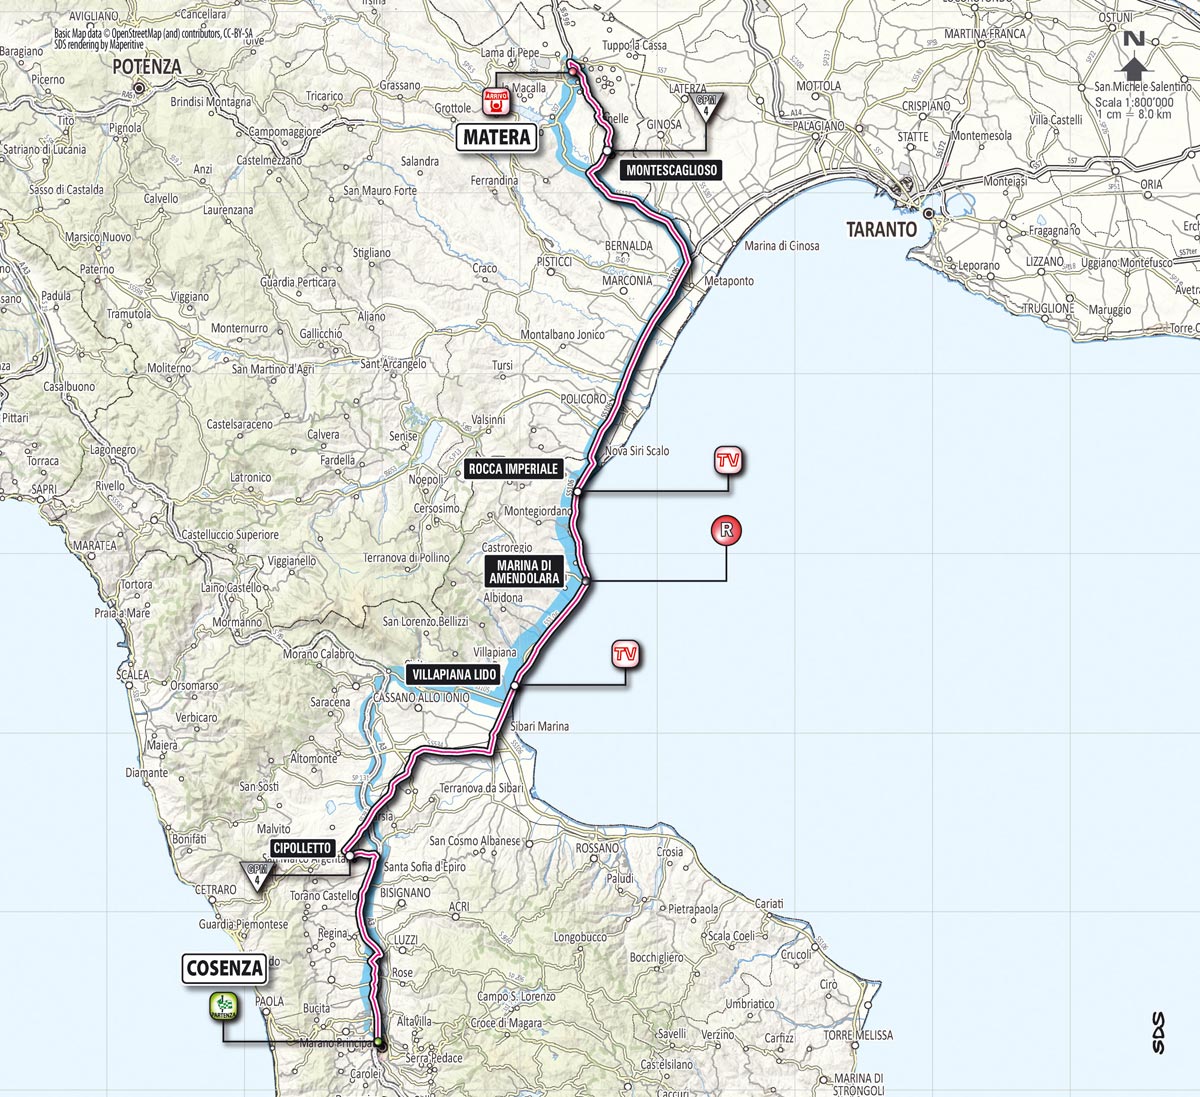 Giro d'Italia 2013 Stage 5 map